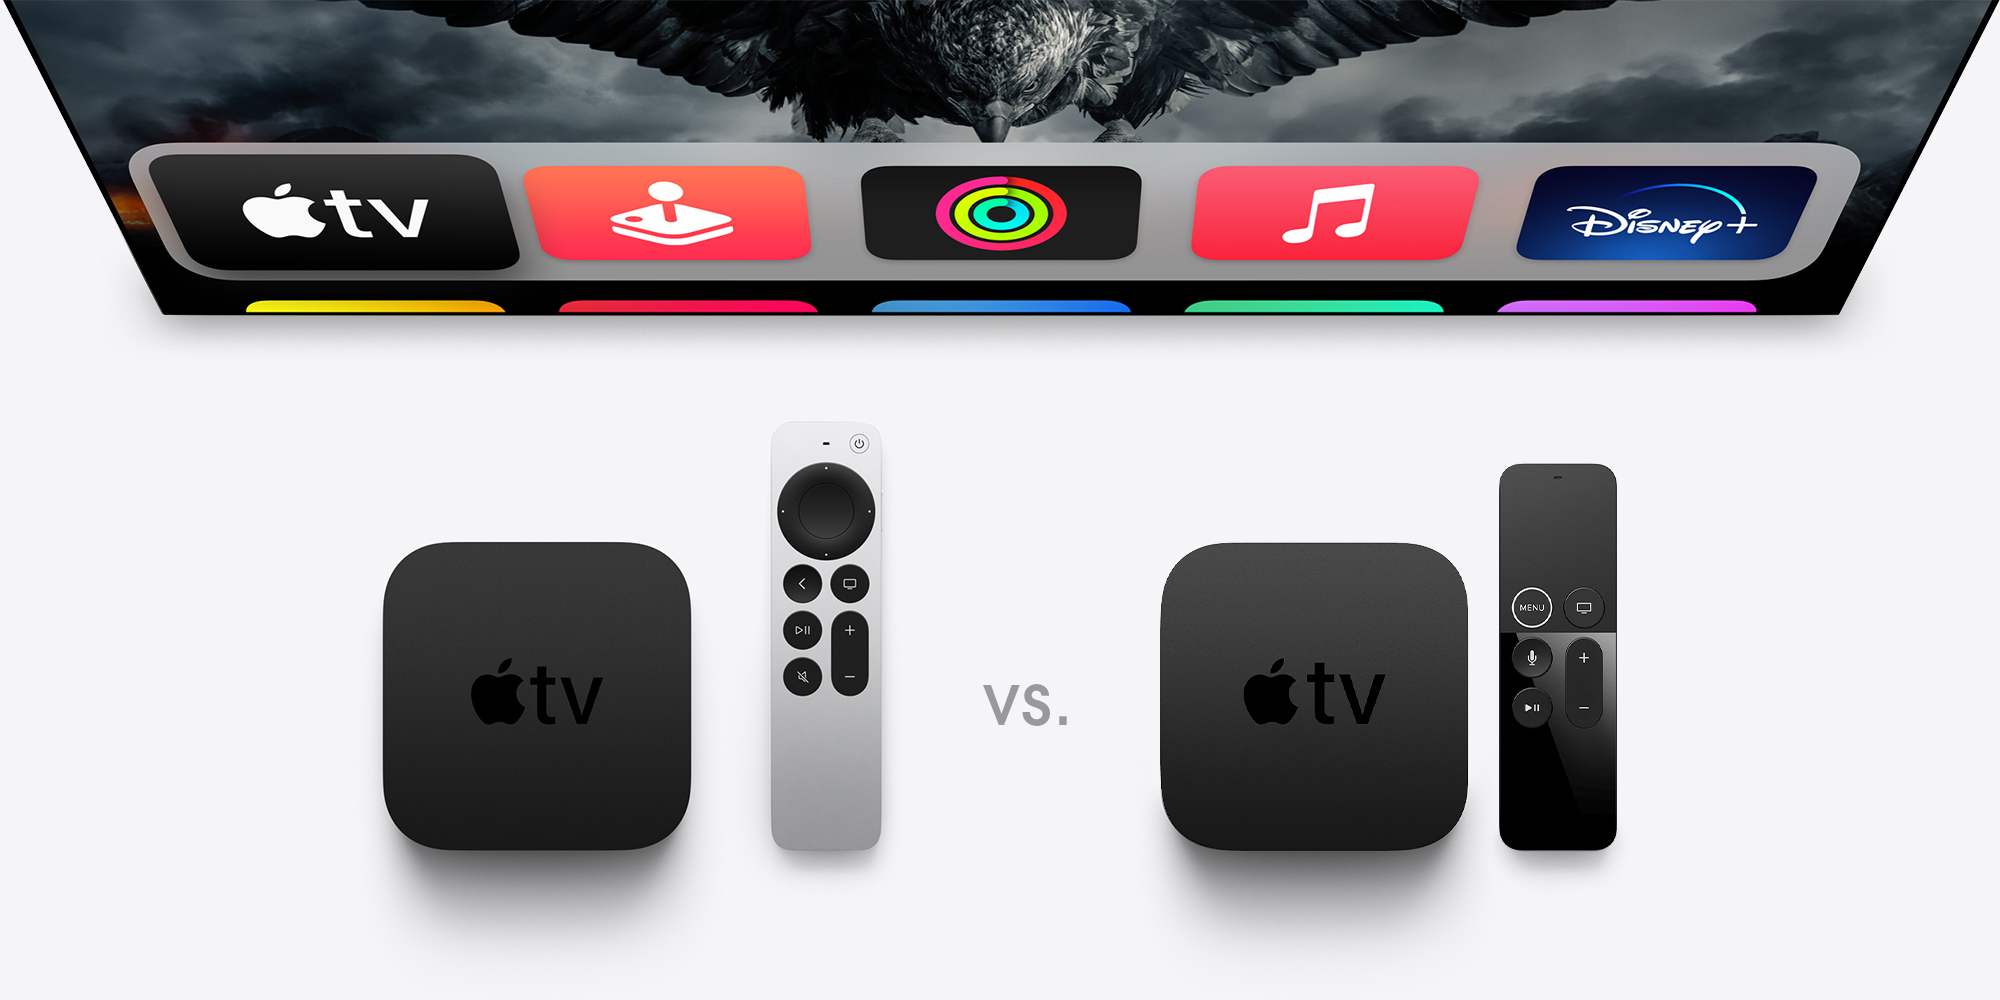 Centrum Slip sko inerti New Apple TV 4K vs old Apple TV 4K: Specs, features, price - 9to5Mac